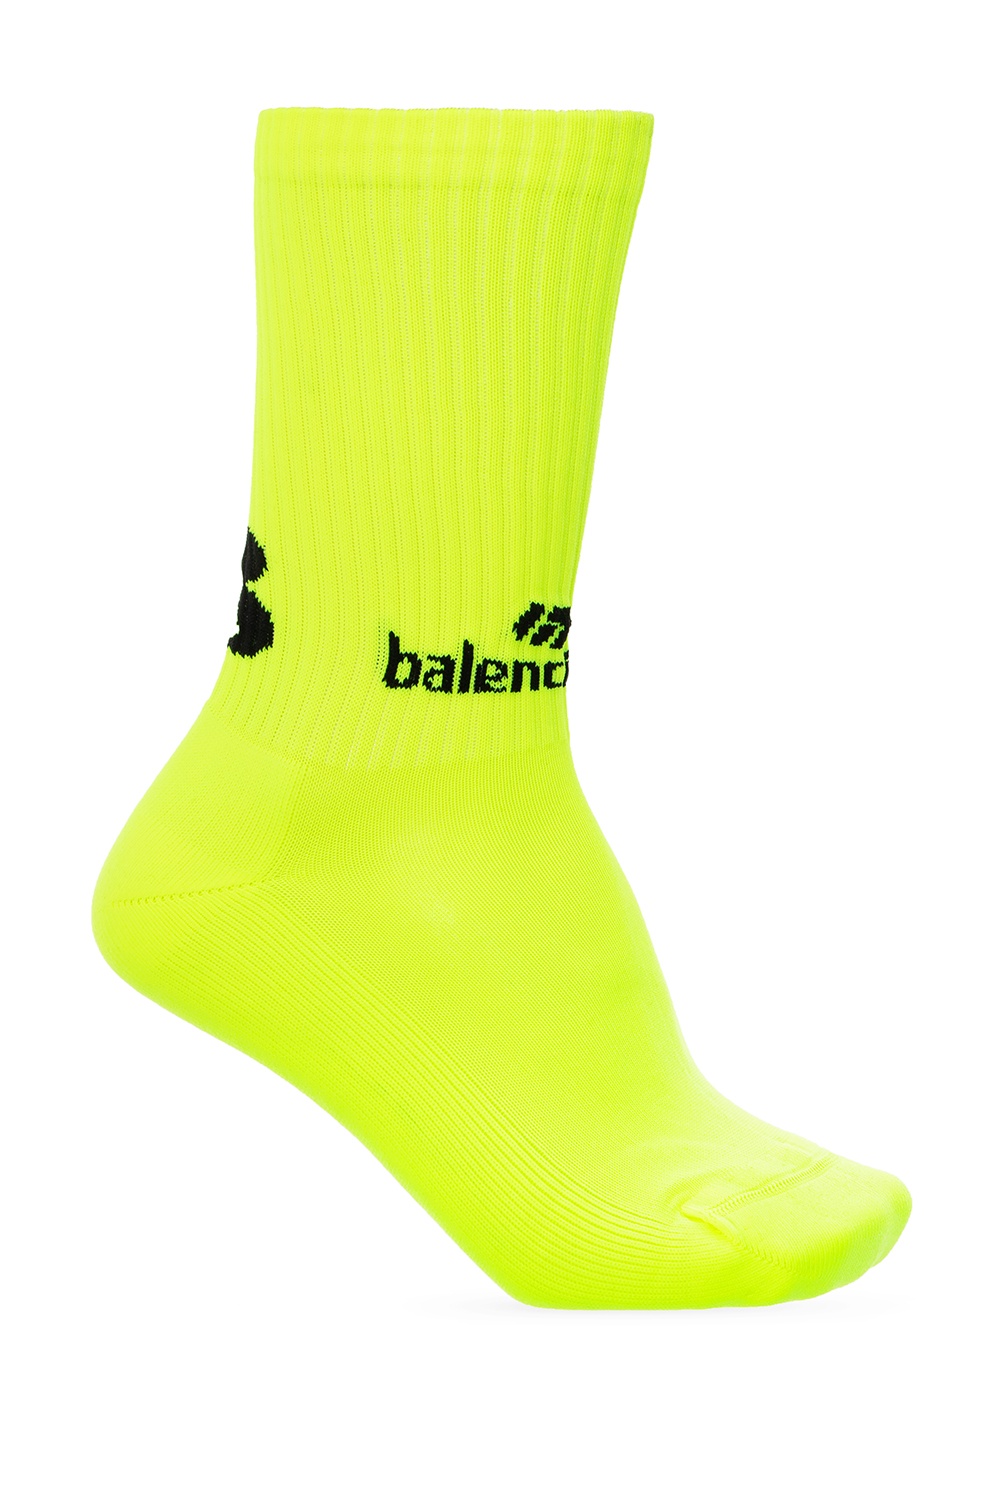 balenciaga yellow socks